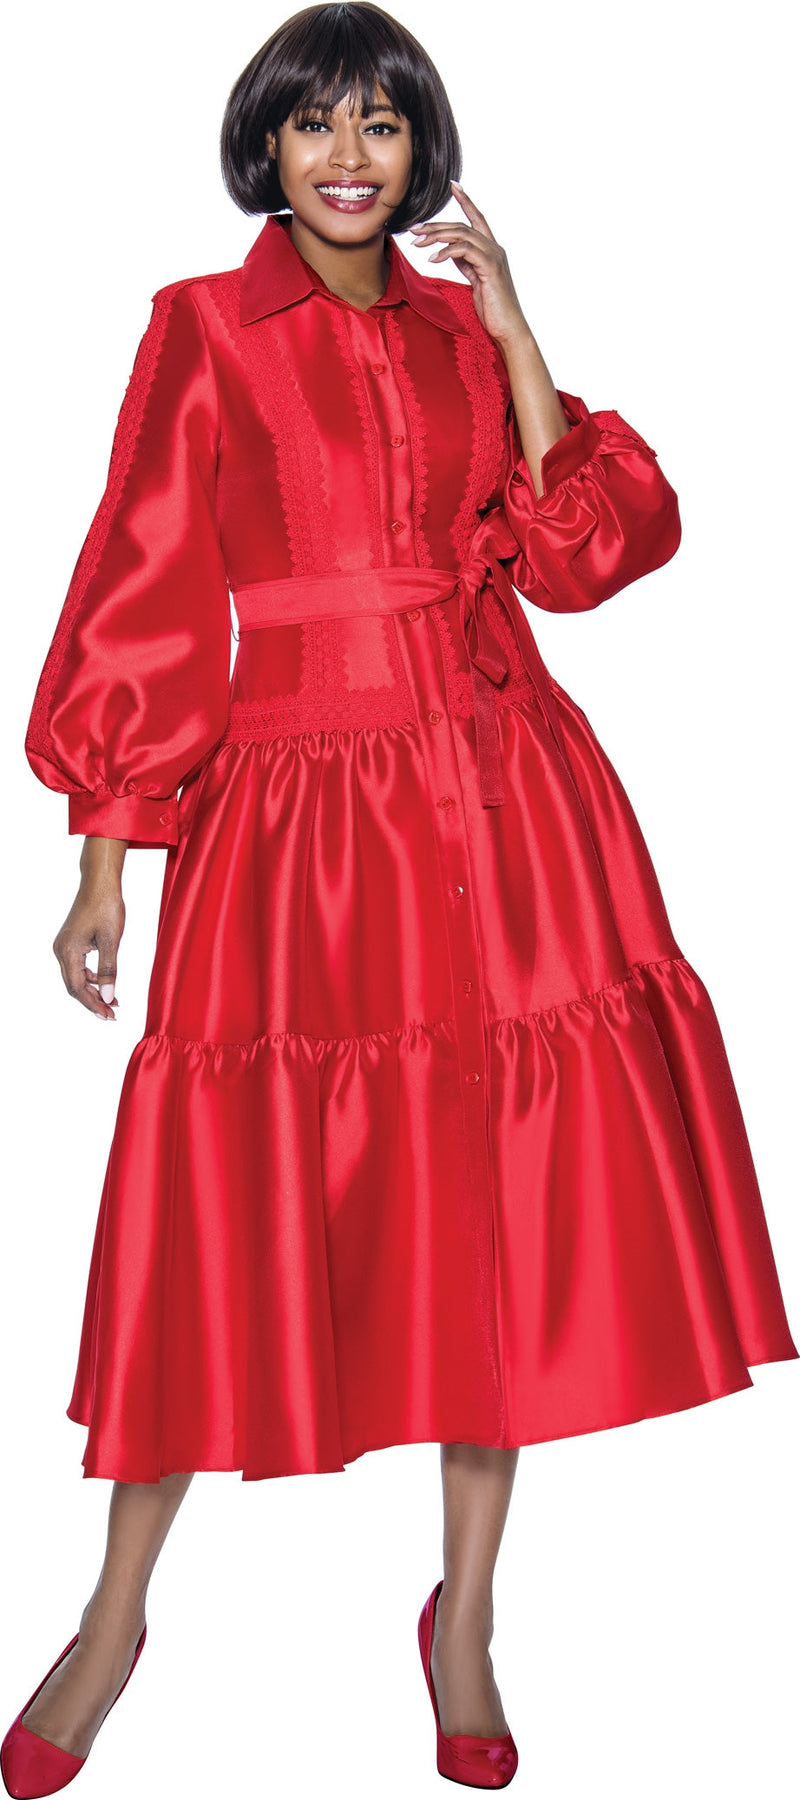 Terramina Church Dress 7029-Red - Church Suits For Less